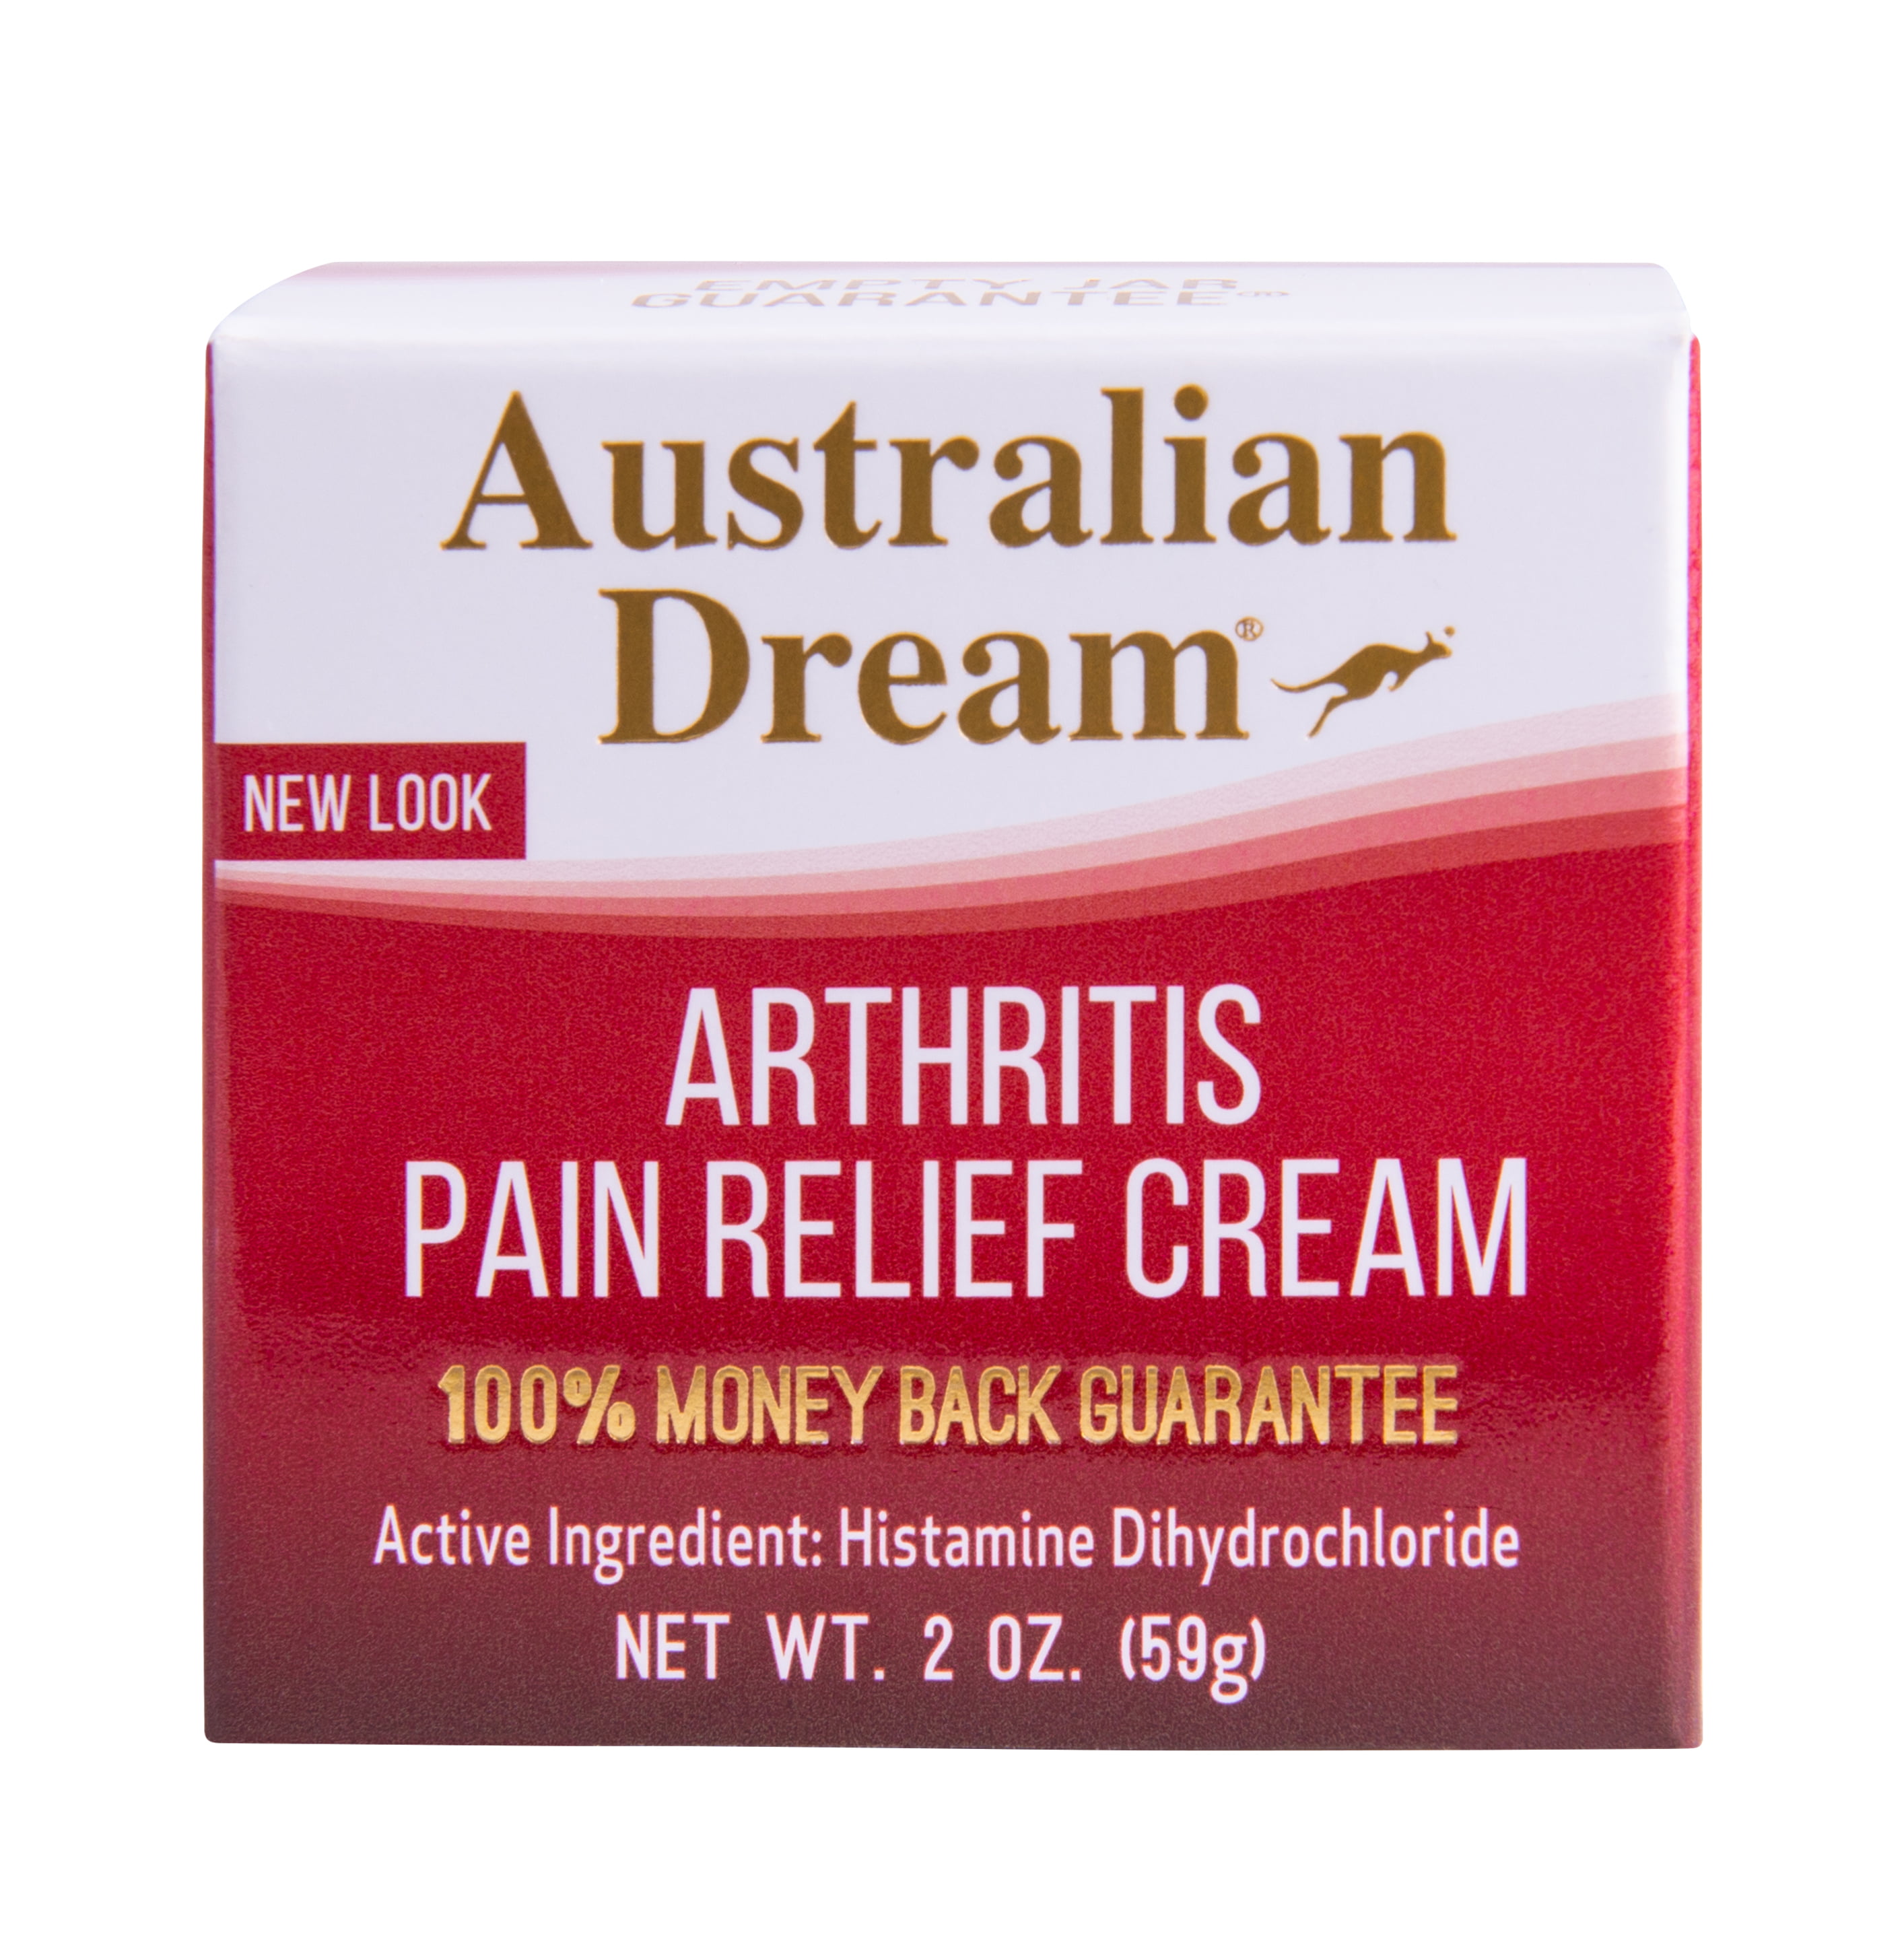 Australian Dream Arthritis Pain Relief Cream, 2 oz. Jar Overthe